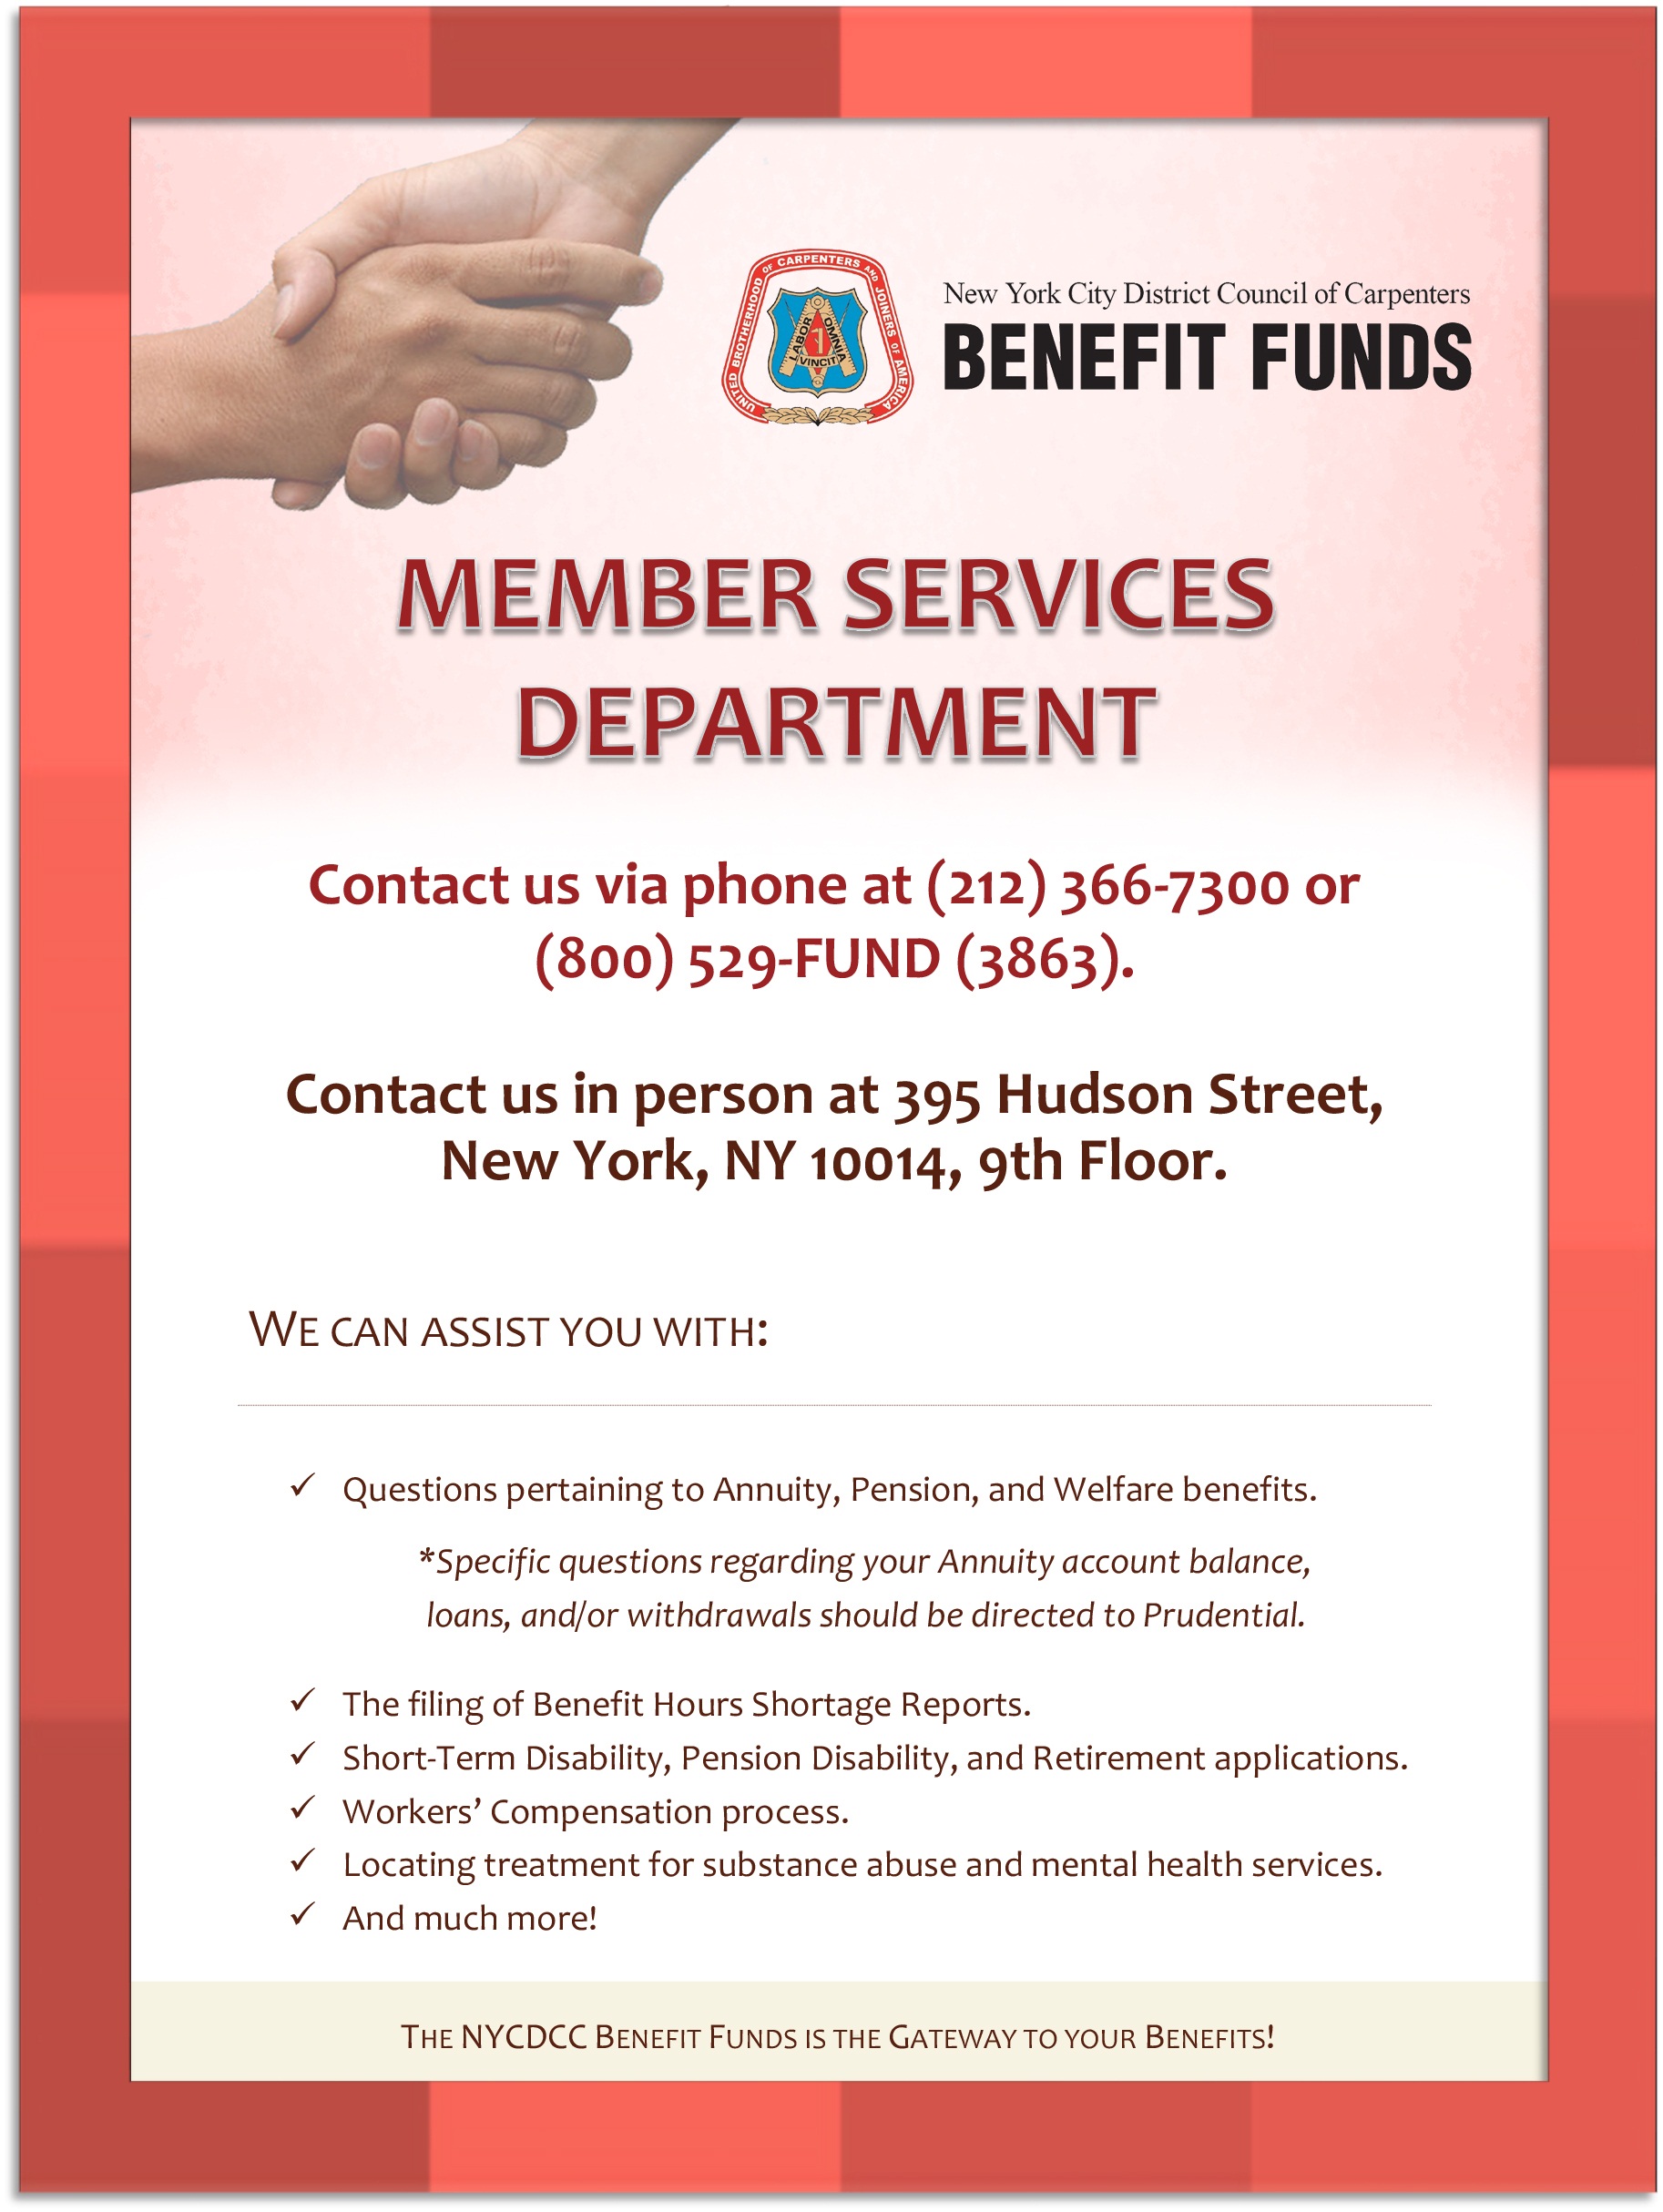 Member Services Department Flyer 2016